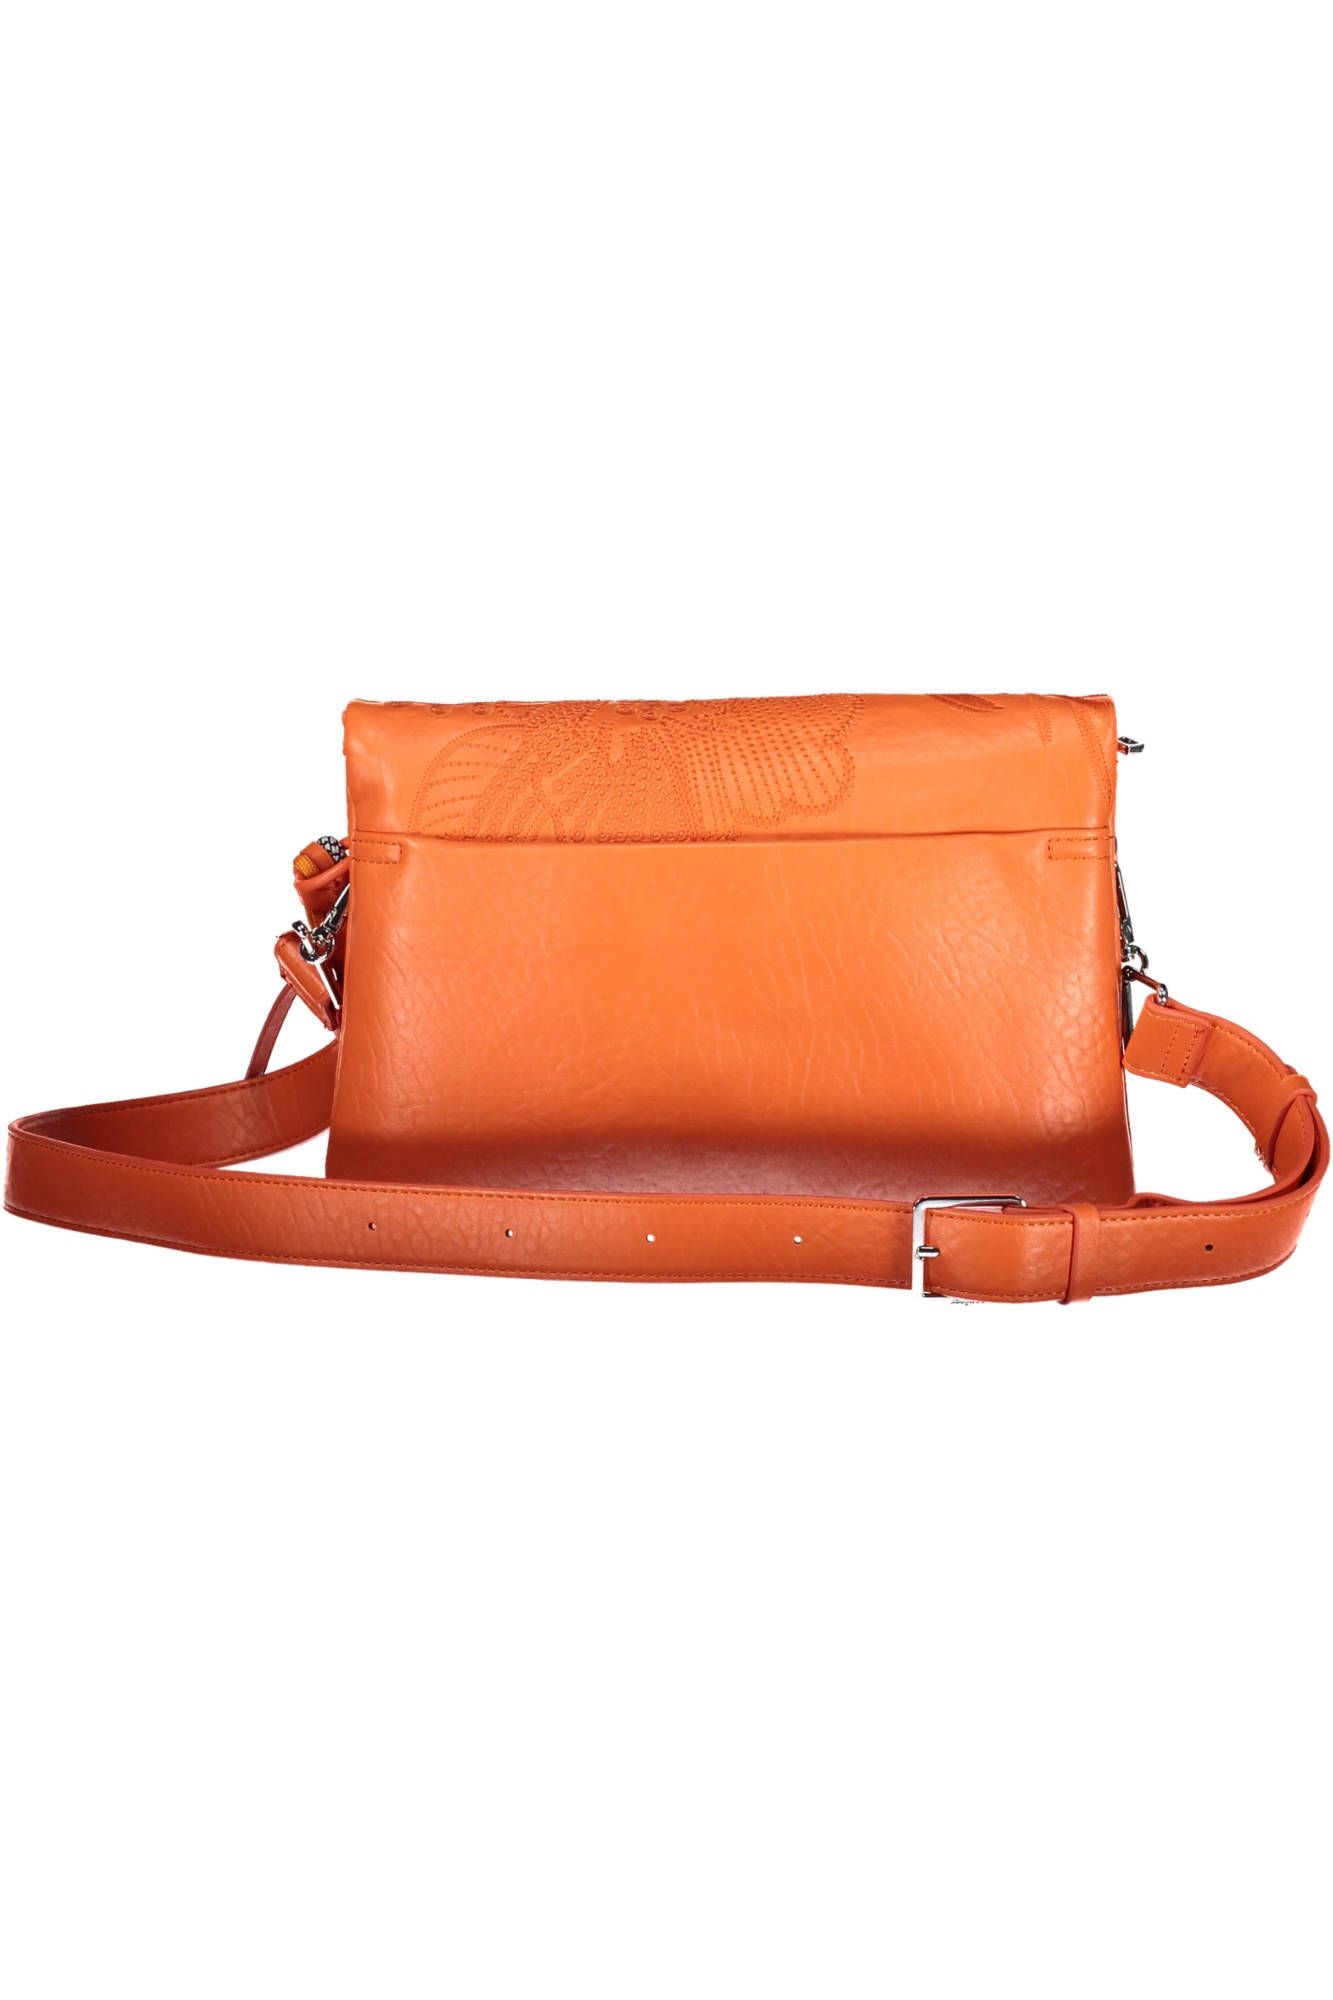 Chic Orange Handbag with Contrasting Details